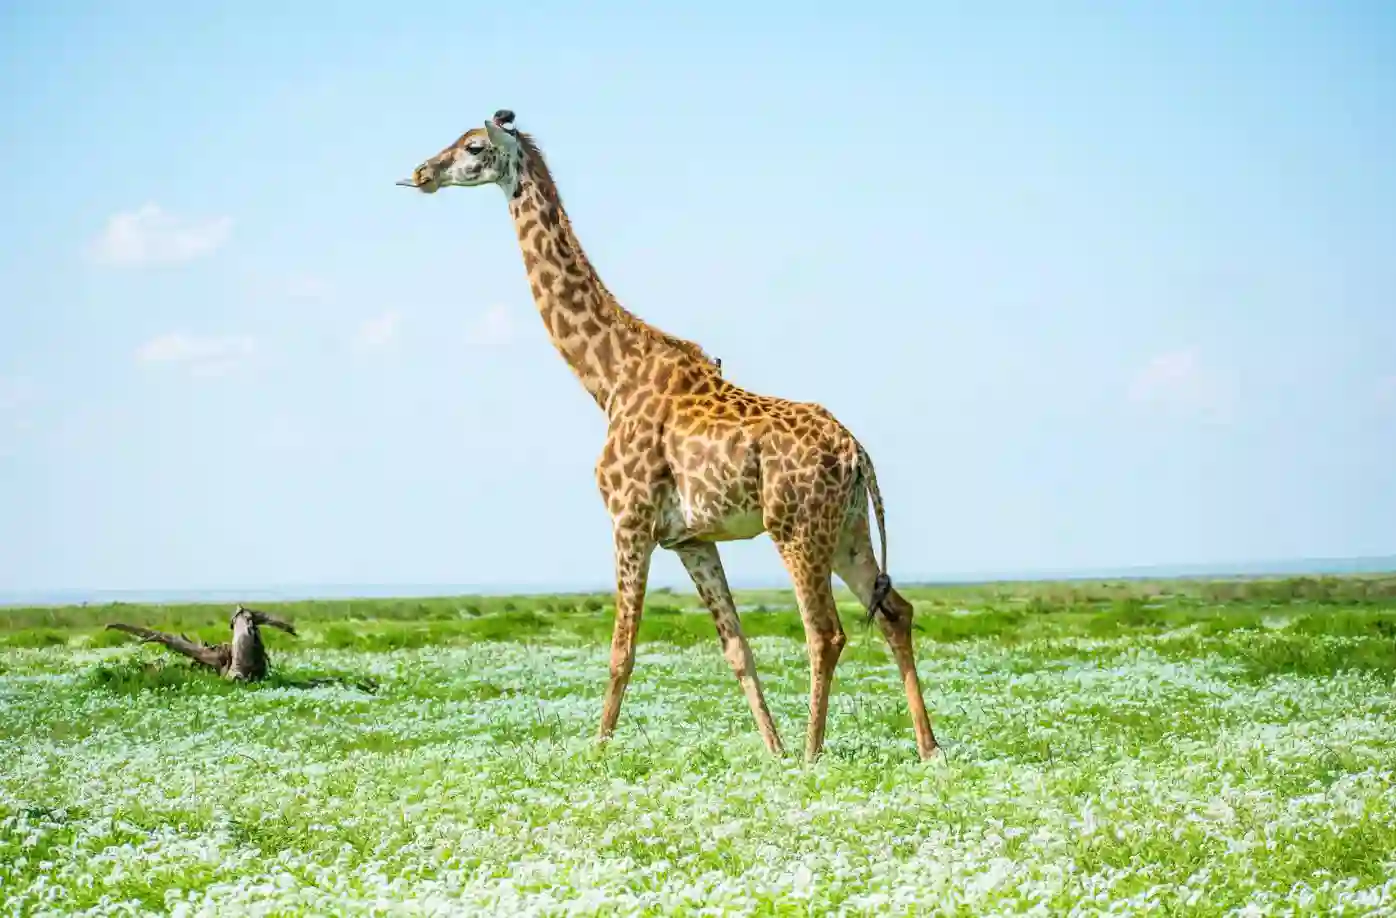 I:\AXUMIMAGES\Afrika\Kenya\Amboseli\Giraf